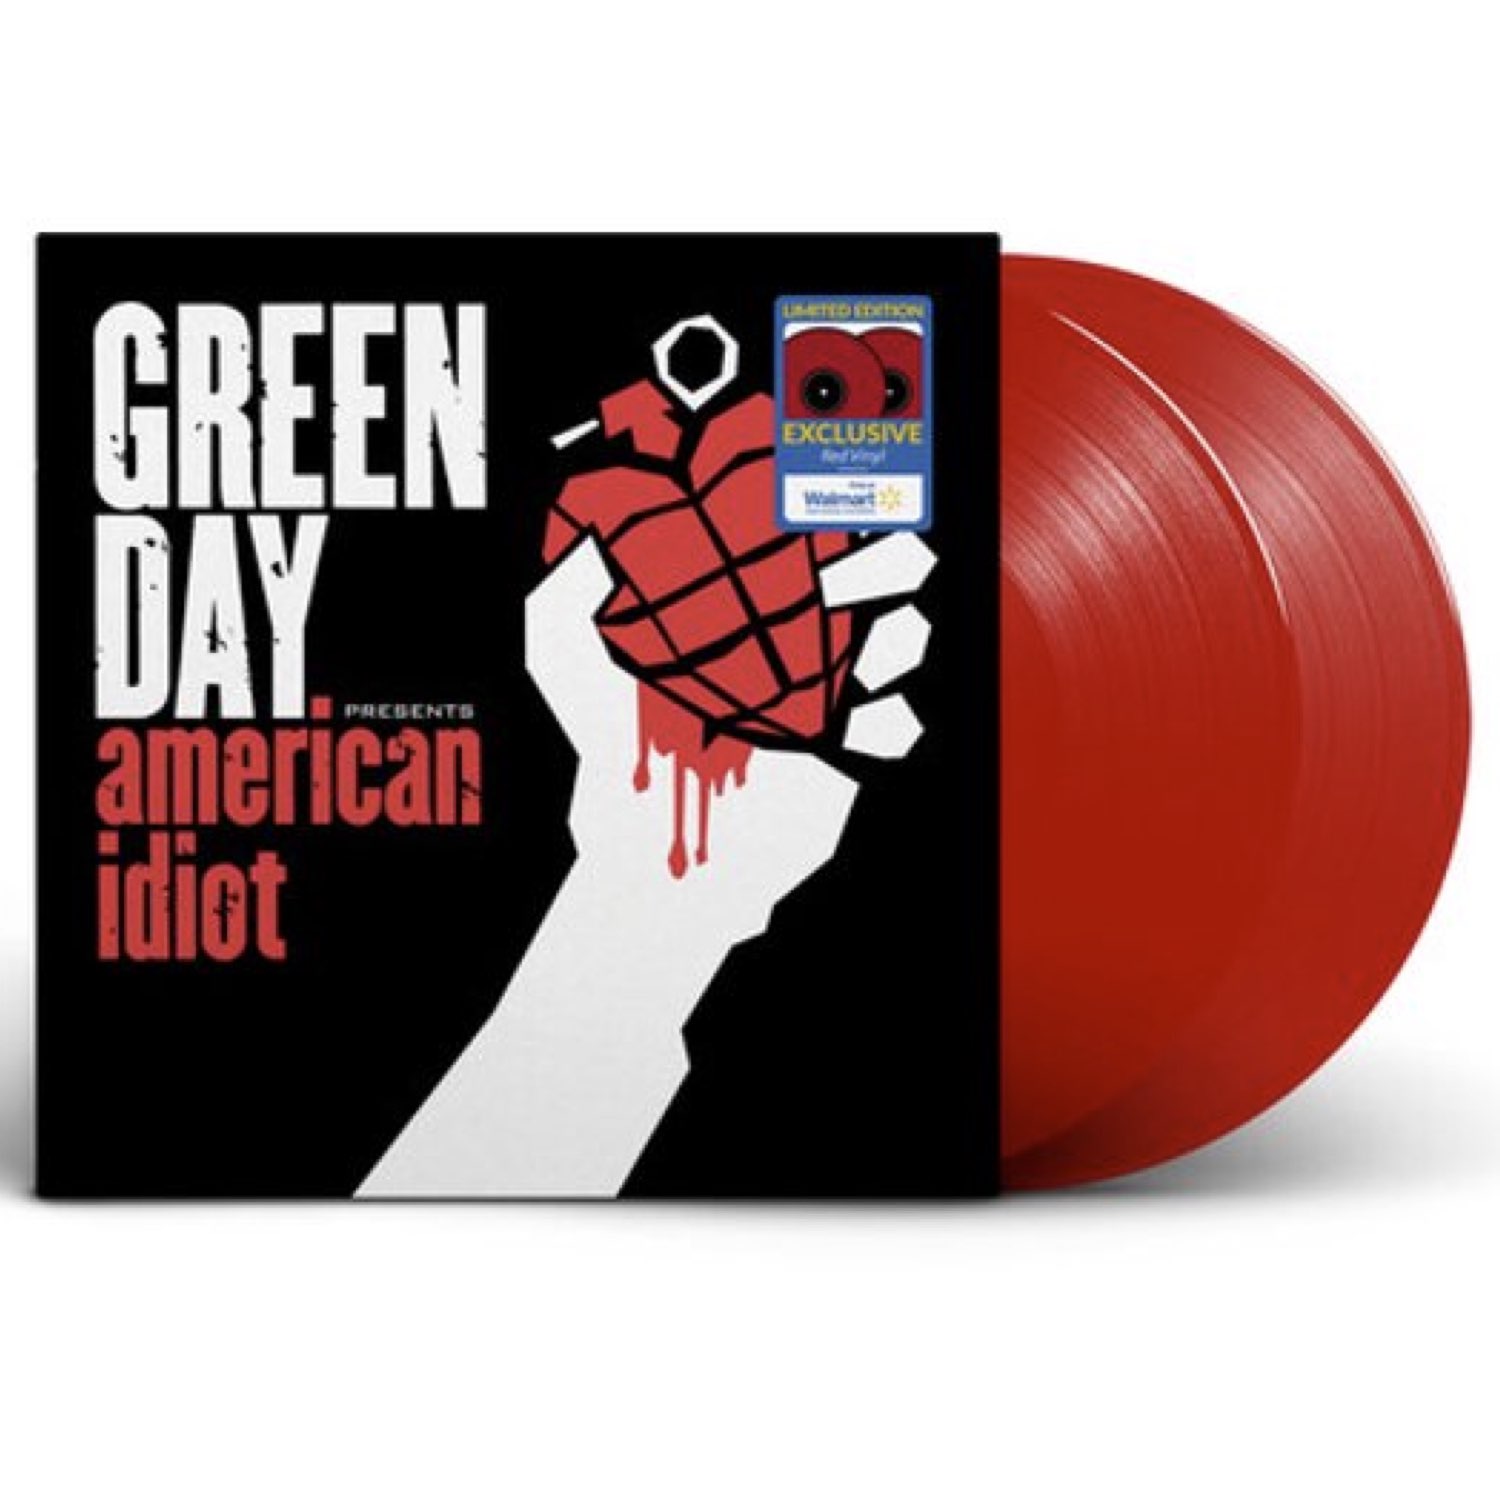 OUTLET - Green Day - American Idiot [Double Red Vinyl] Walmart Exclusive - PEQ AVARIA - LEIA A DESCRIÇÃO